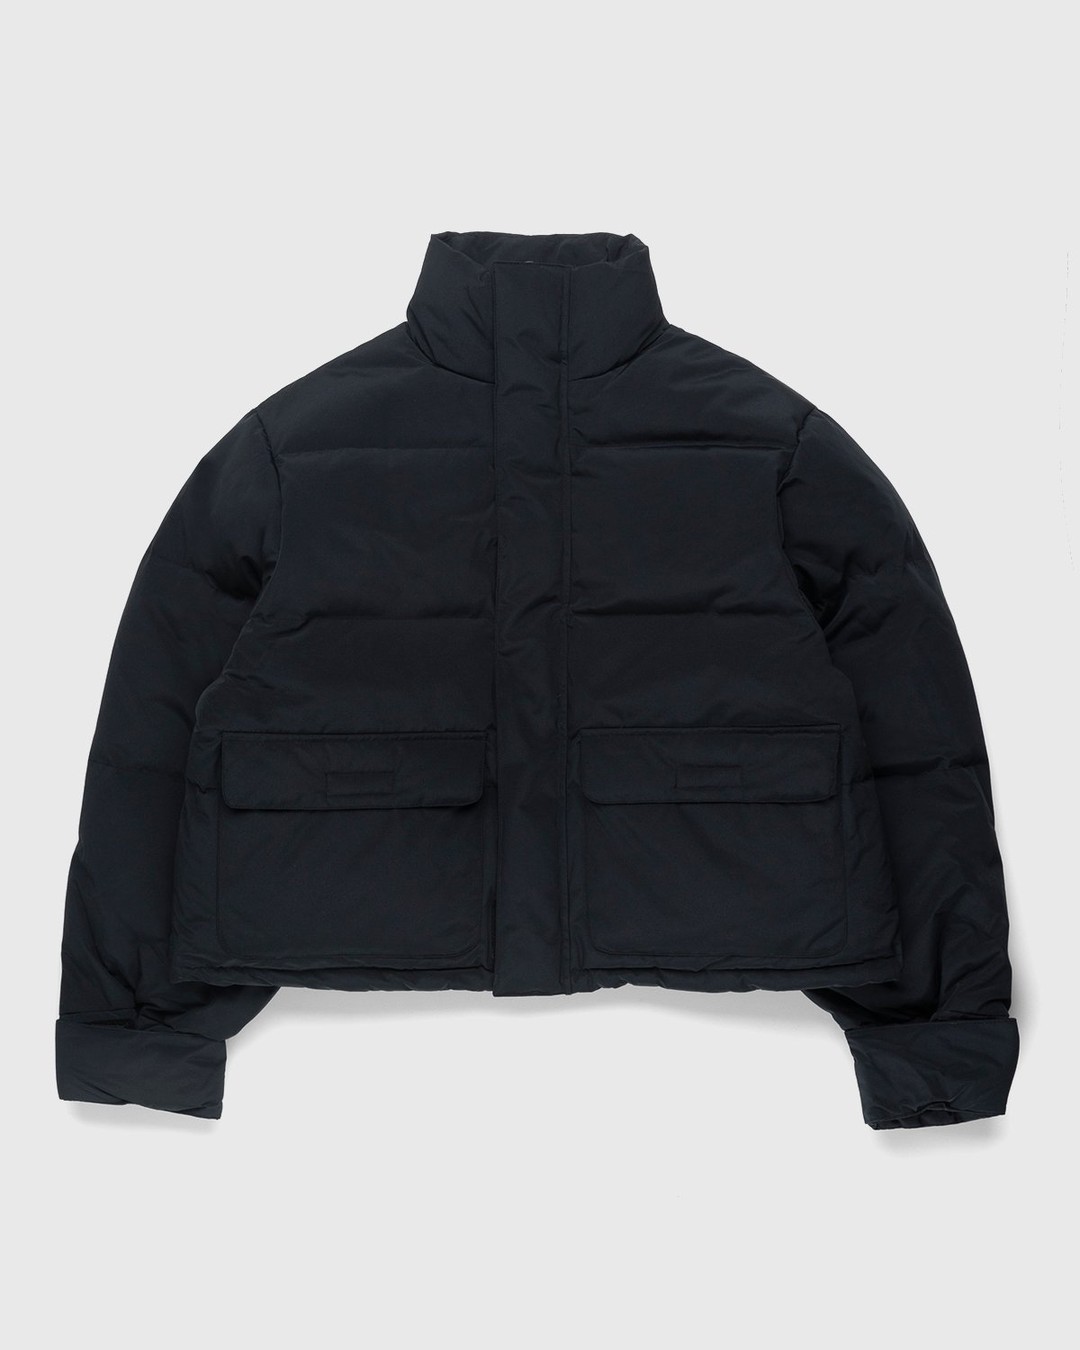 Entire Studios – PFD Puffer Jacket Soot | Highsnobiety Shop